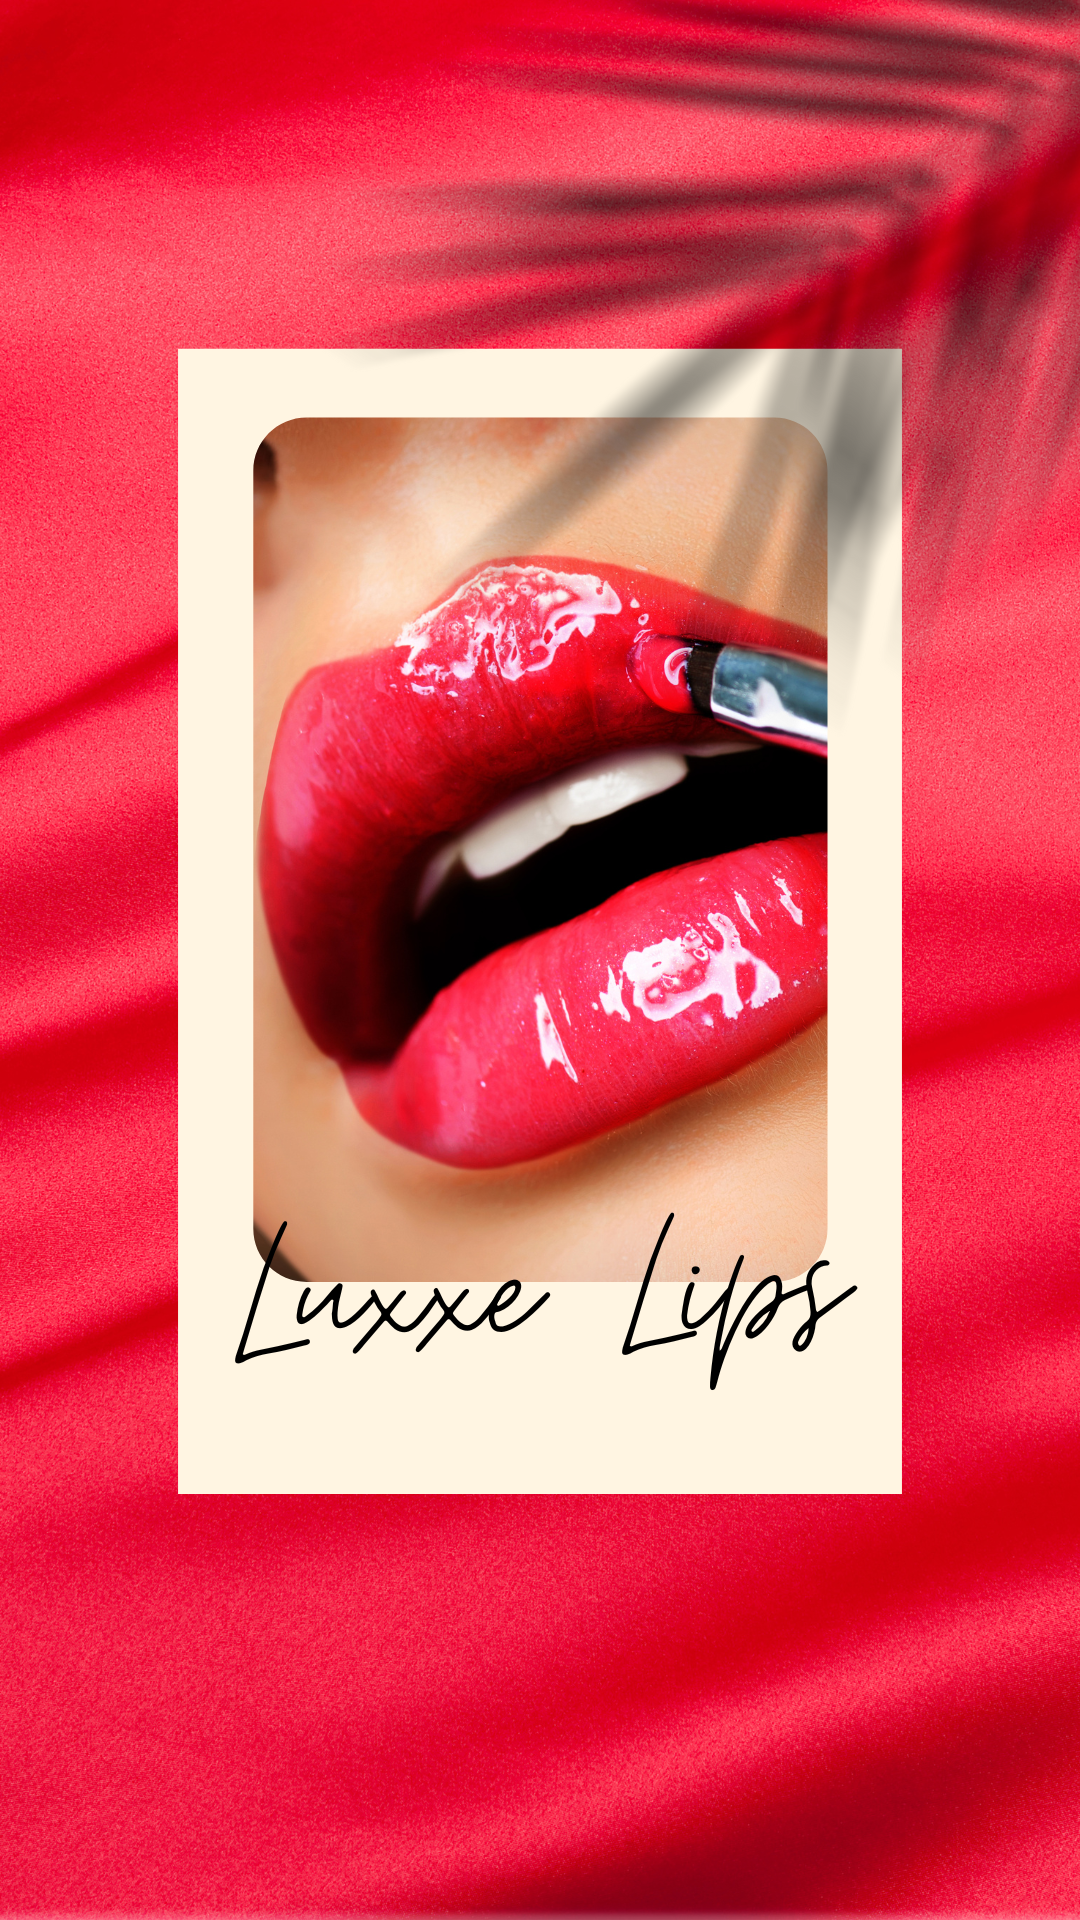 Luxxe Lip Fixx